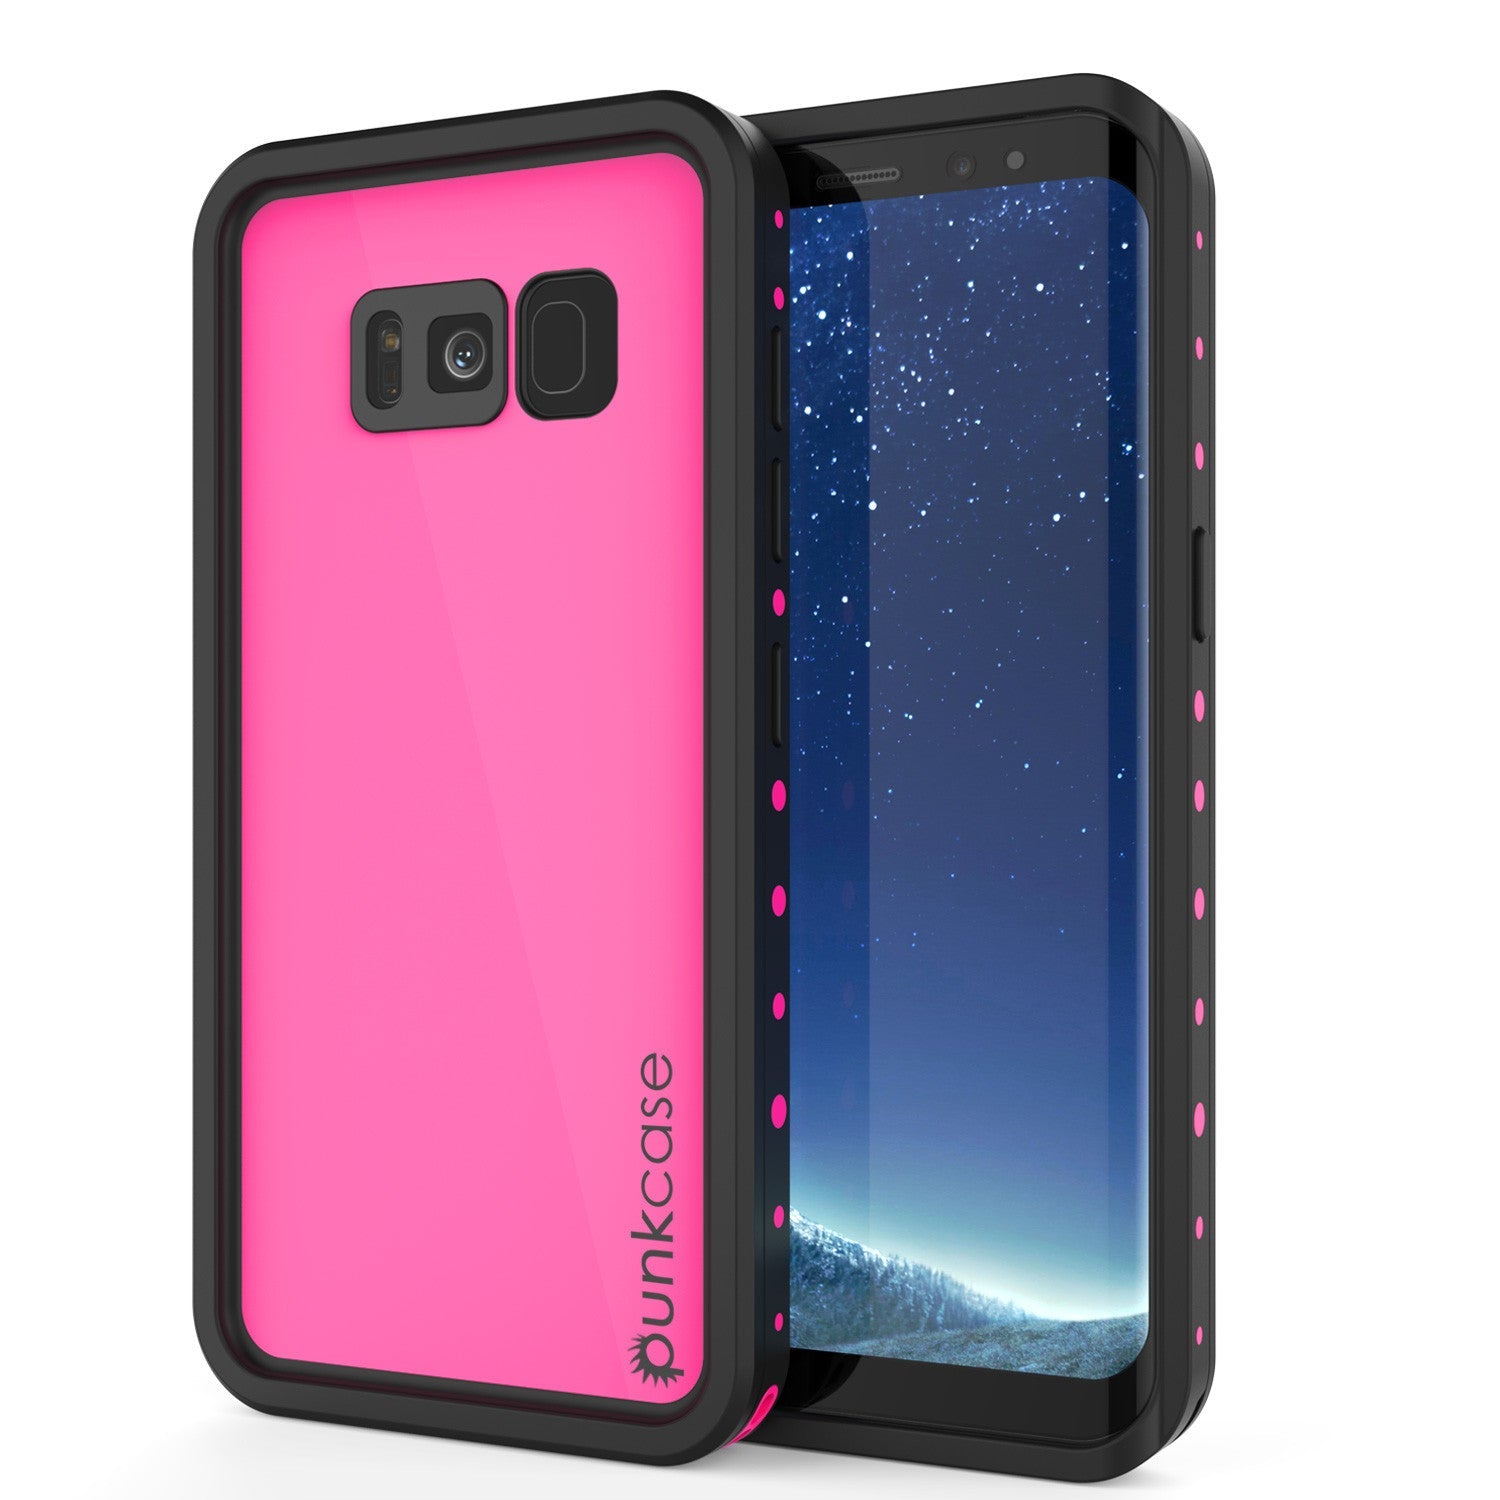 Galaxy S8 Plus Waterproof Case PunkCase StudStar Pink Thin 6.6ft Underwater IP68 Shock/Snow Proof (Color in image: pink)